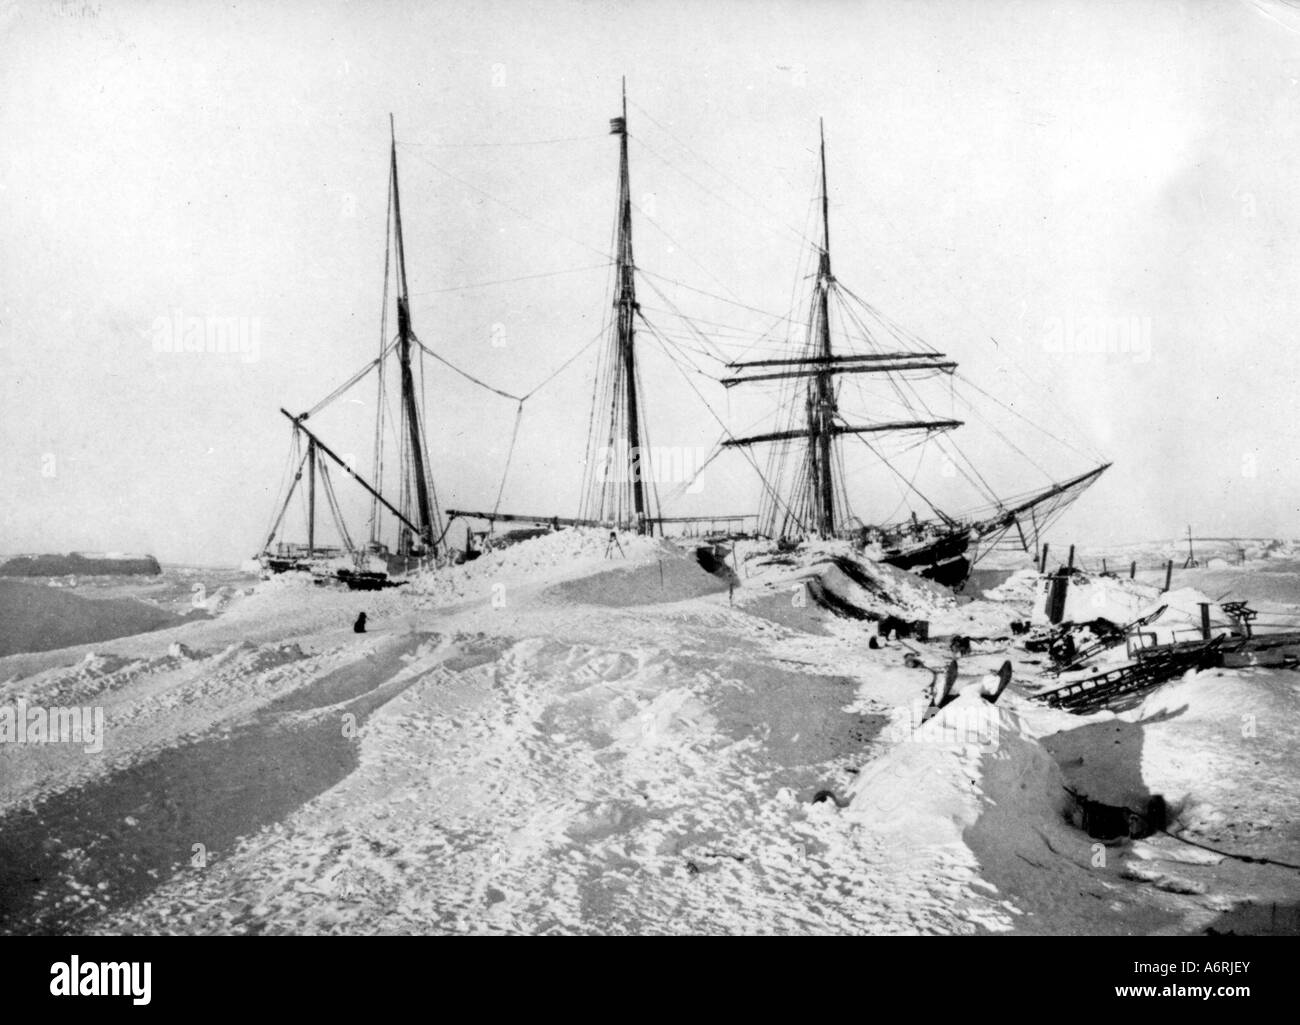 'Drygalski, Erich von, 9.2.1865 - 10.1.1949, German geographer & polar scientist, expedition to the South Pole 1901 - 1903, ship Stock Photo